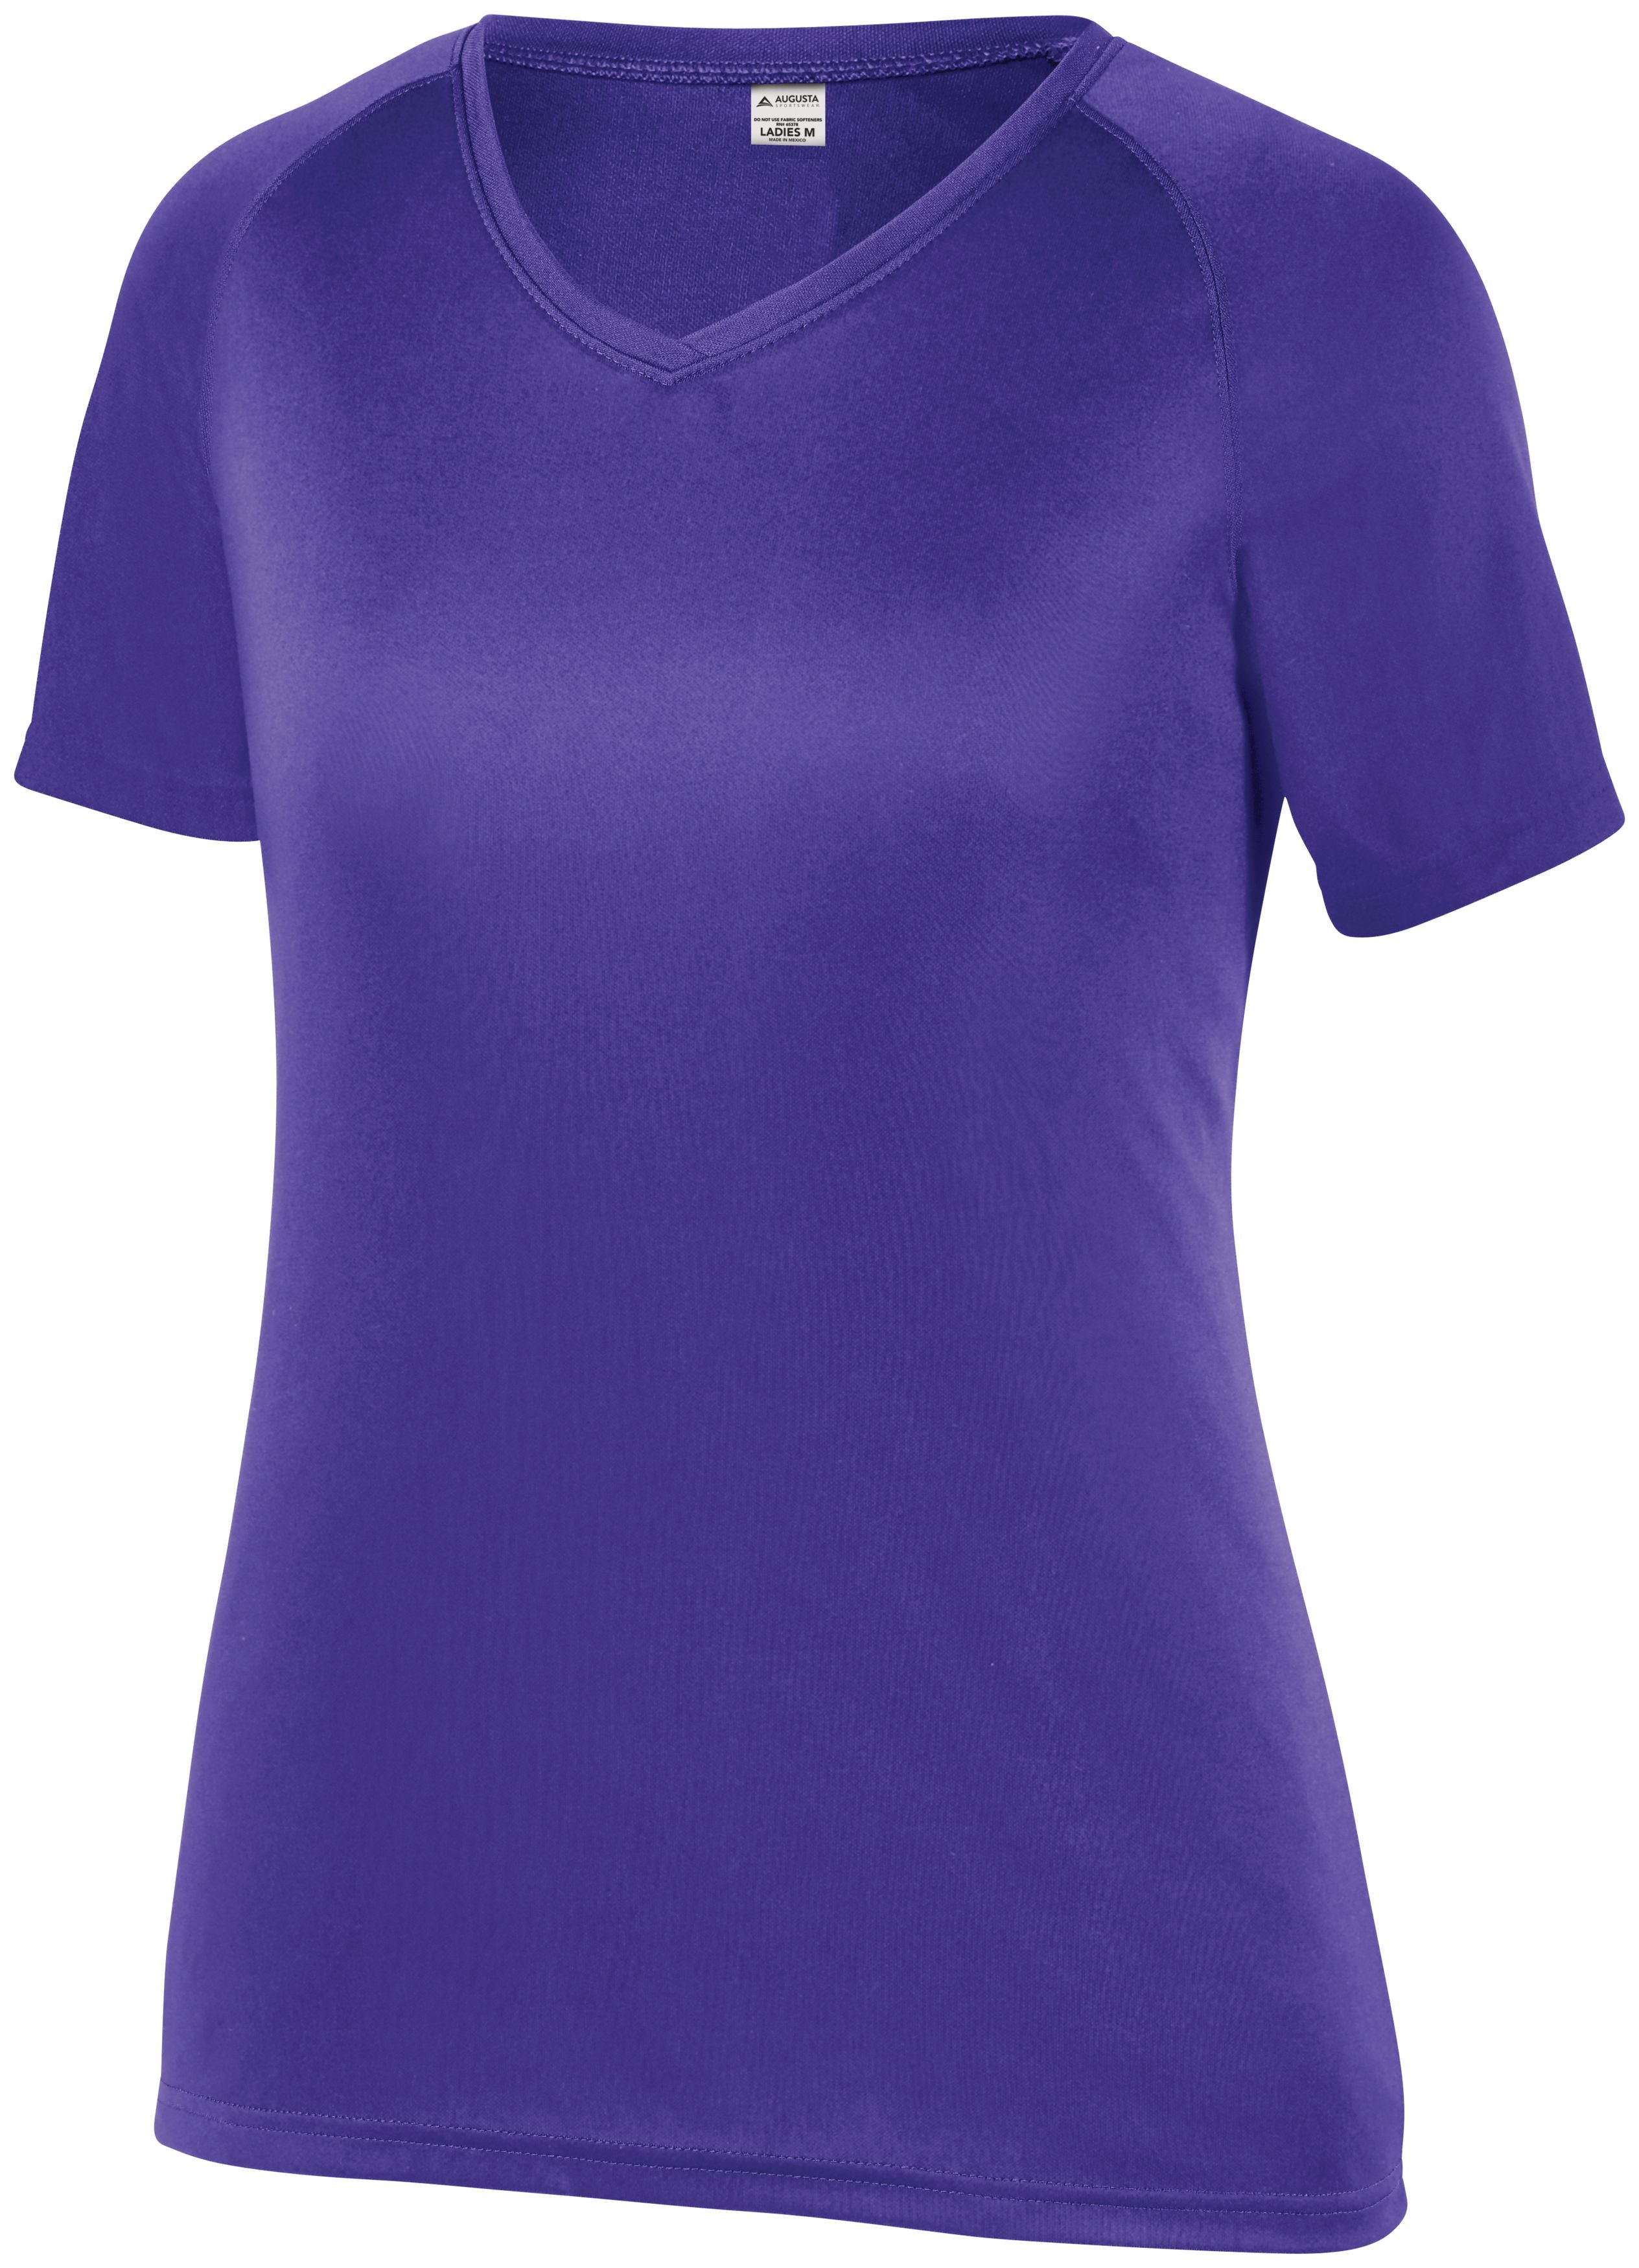 Augusta Sportswear Girls Attain Wicking Raglan Sleeve Tee in Purple (Hlw)  -Part of the Girls, T-Shirts, Augusta-Products, Girls-Tee-Shirt, Shirts product lines at KanaleyCreations.com